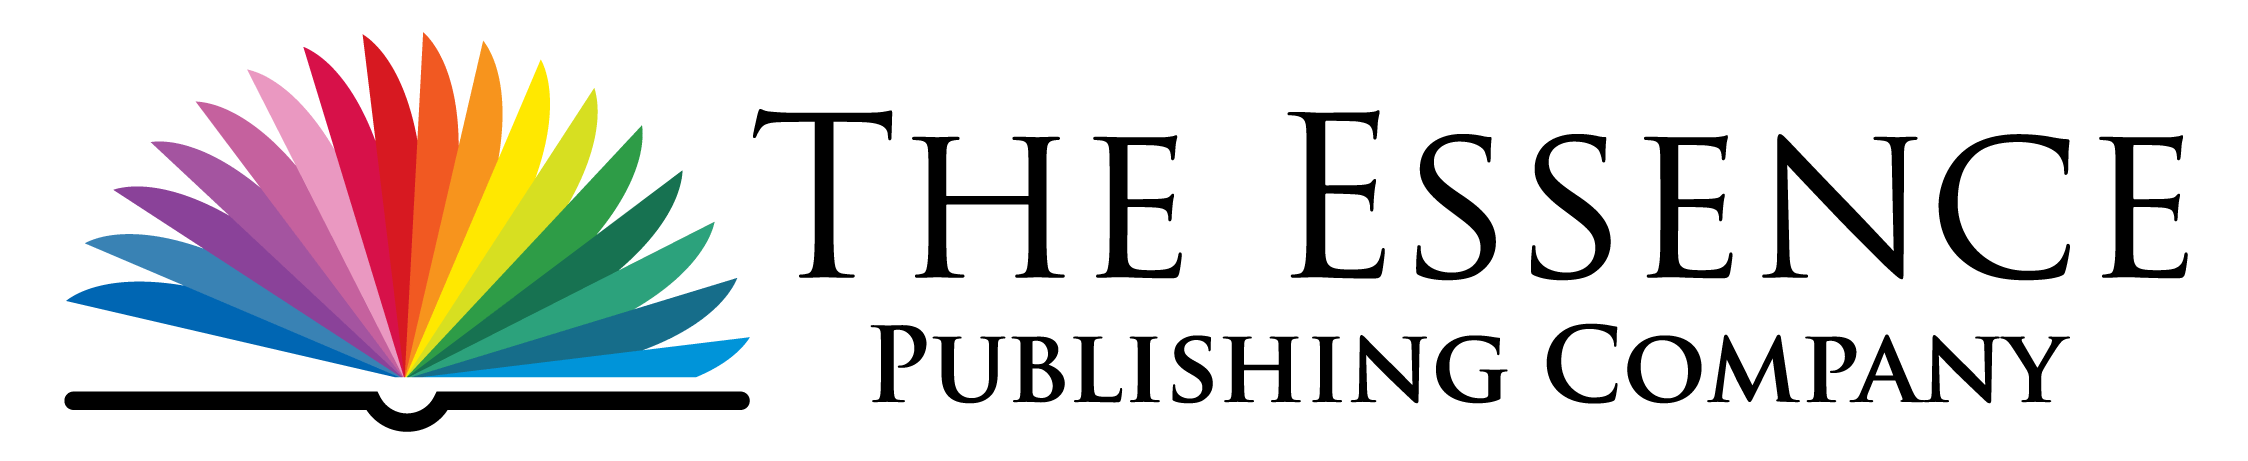 The Essence Publishing Company